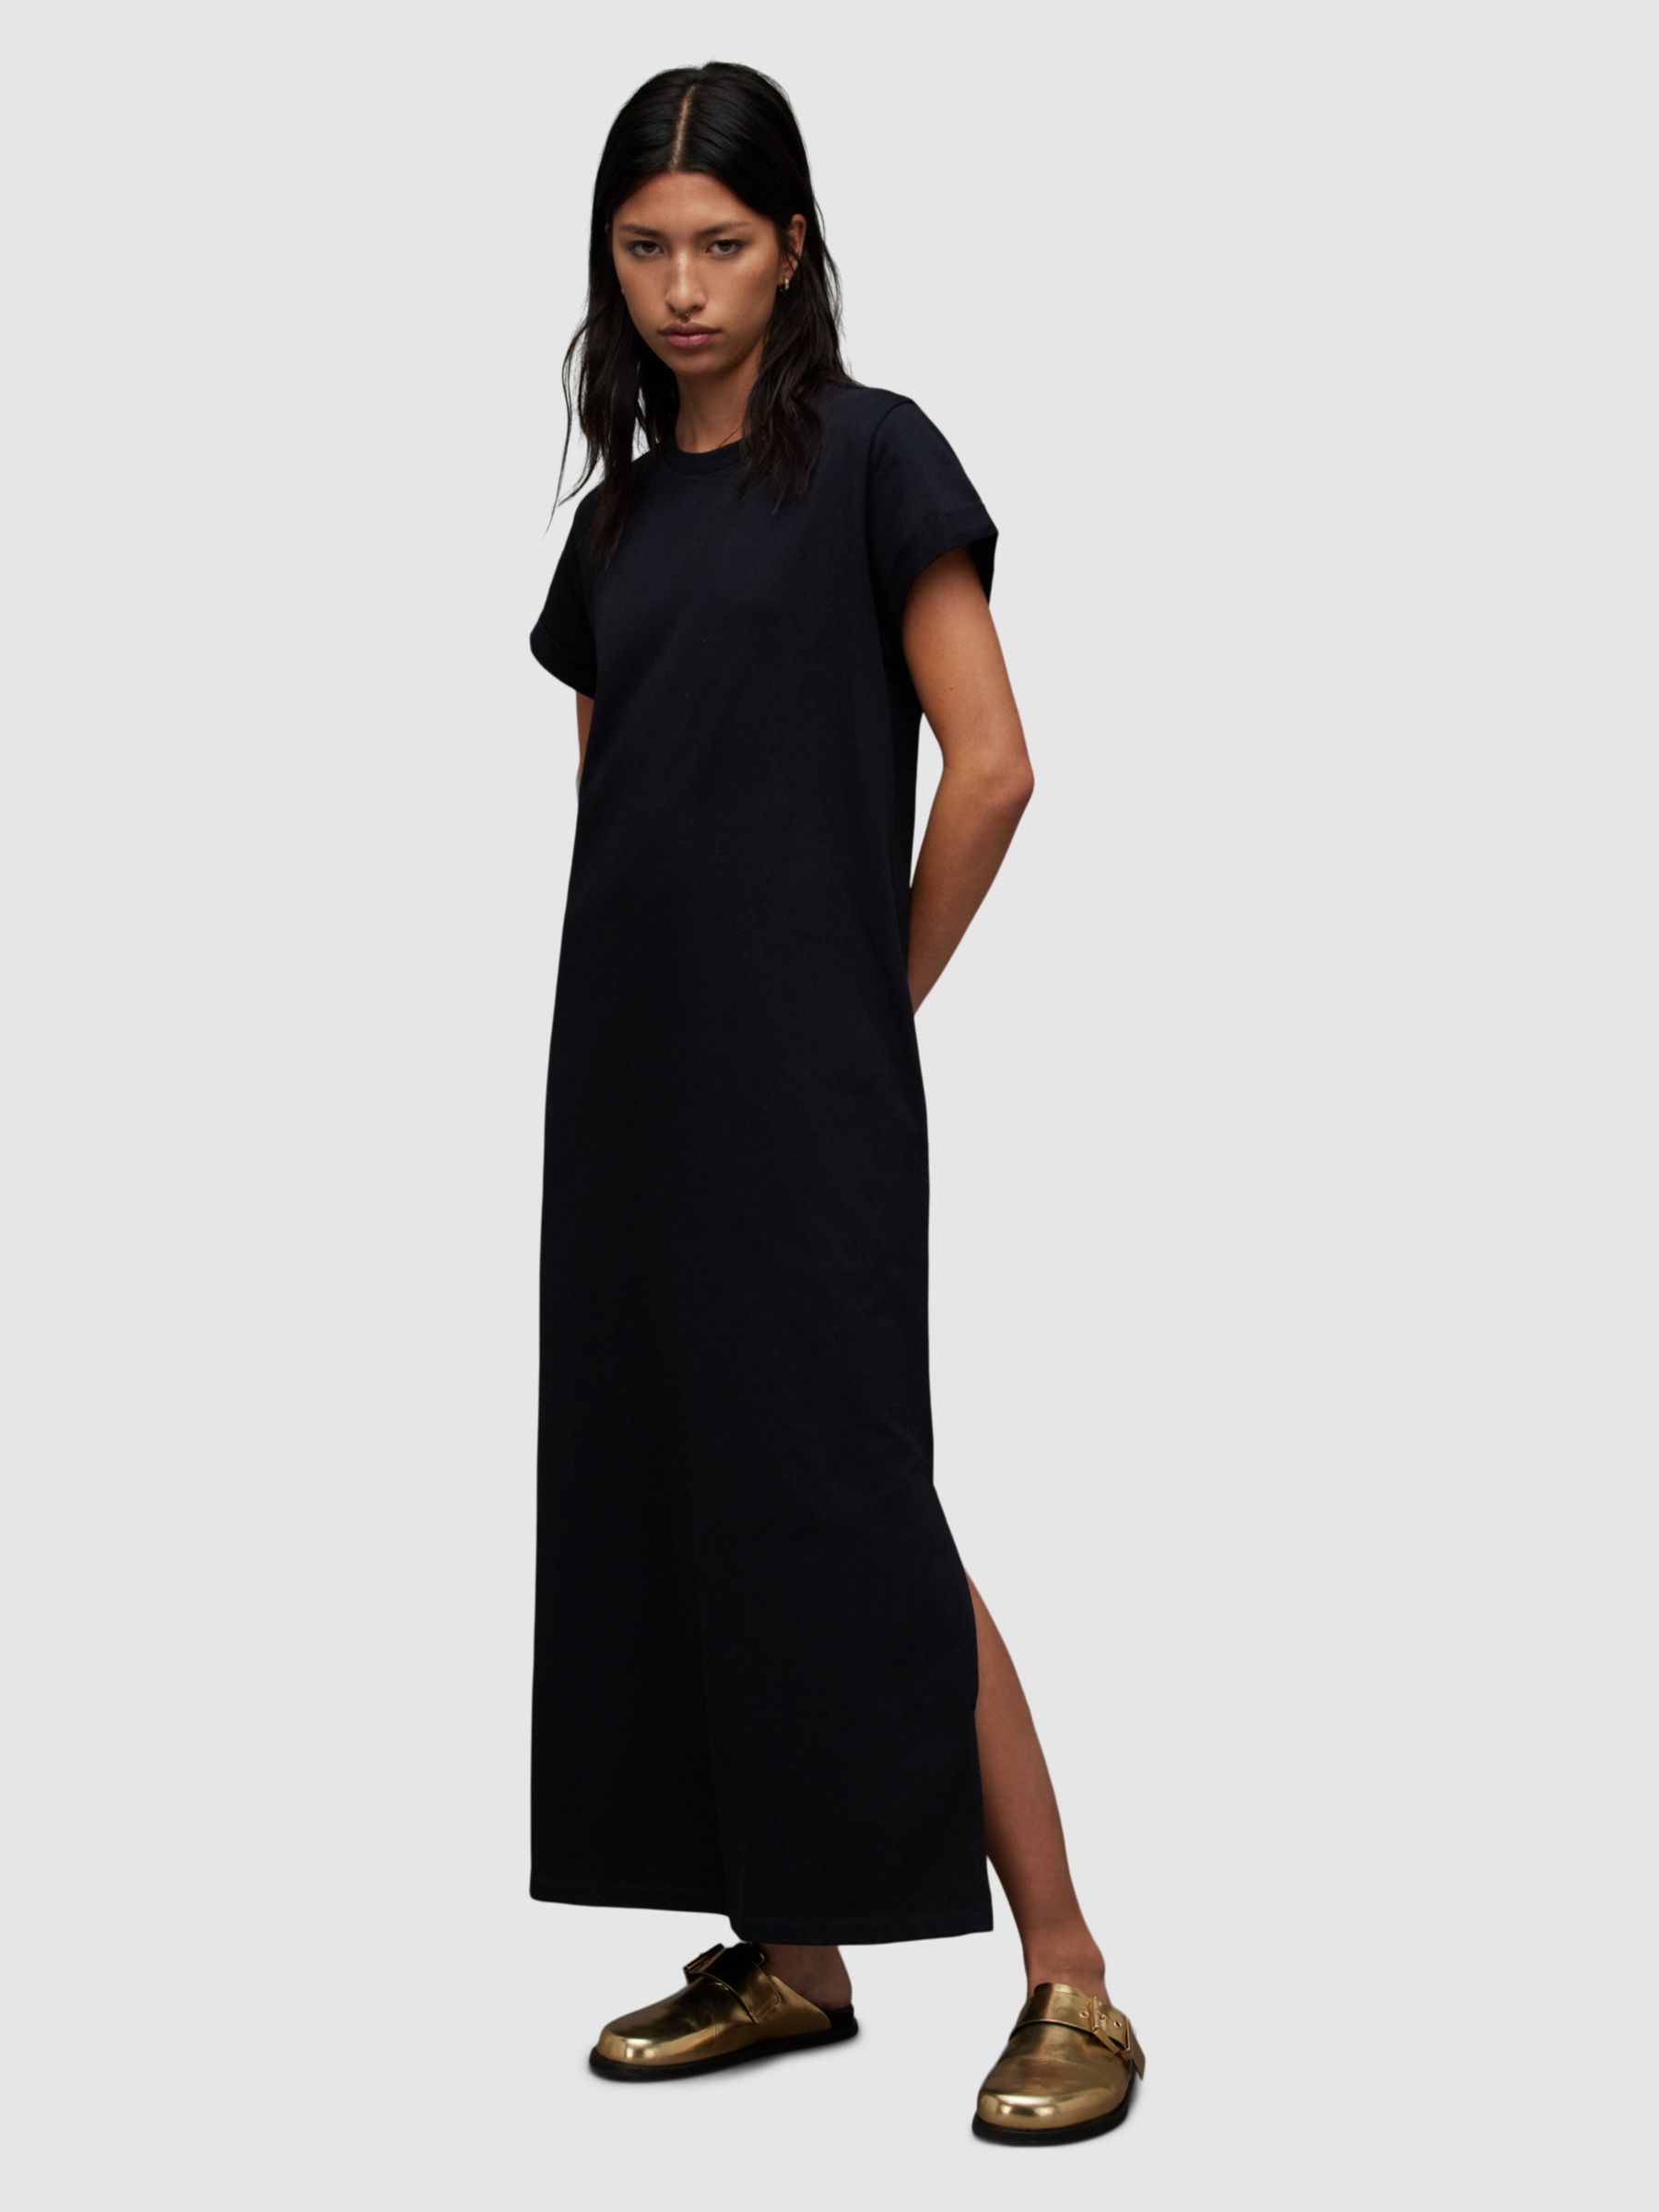 Auden Sanibel Print Mini Dress Black